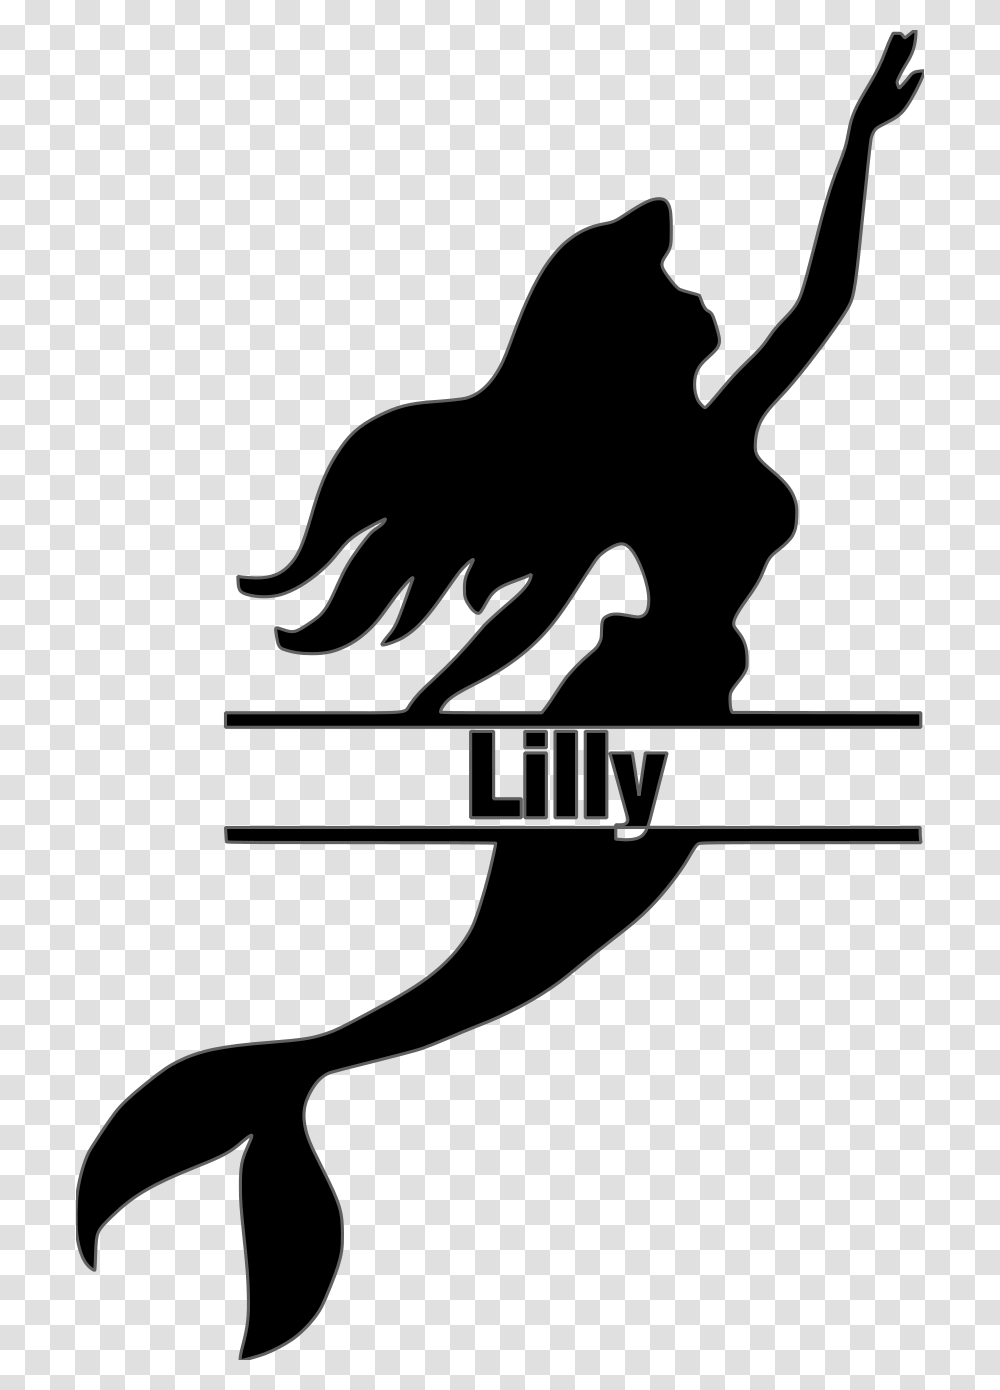 Free Free 192 Dream Big Little Mermaid Svg Free SVG PNG EPS DXF File